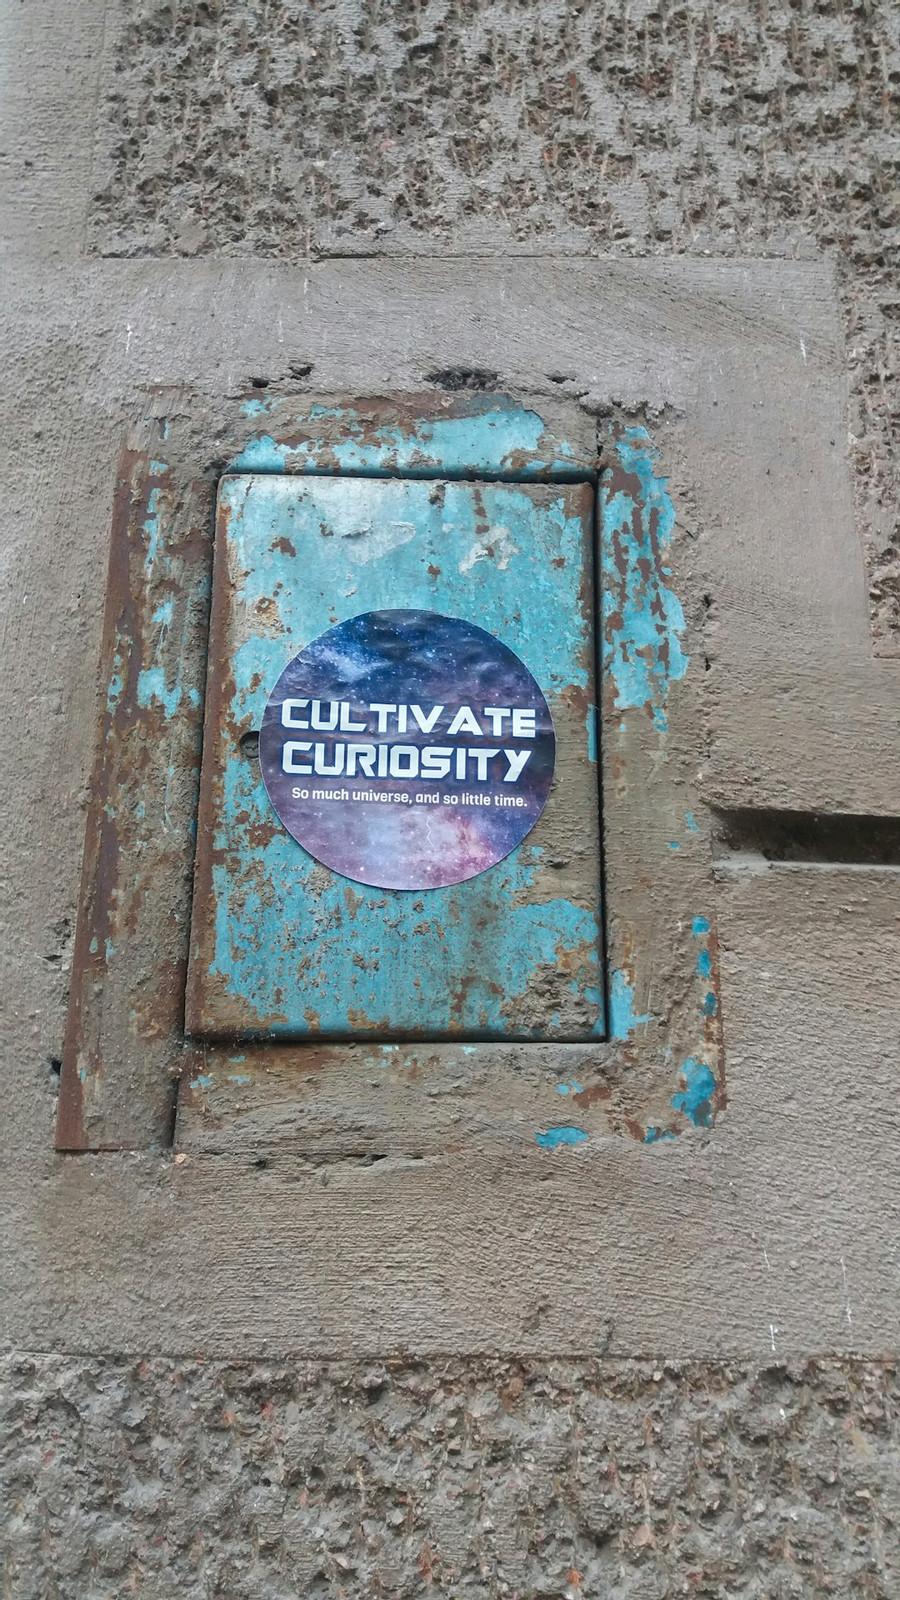 4. Curiosity.